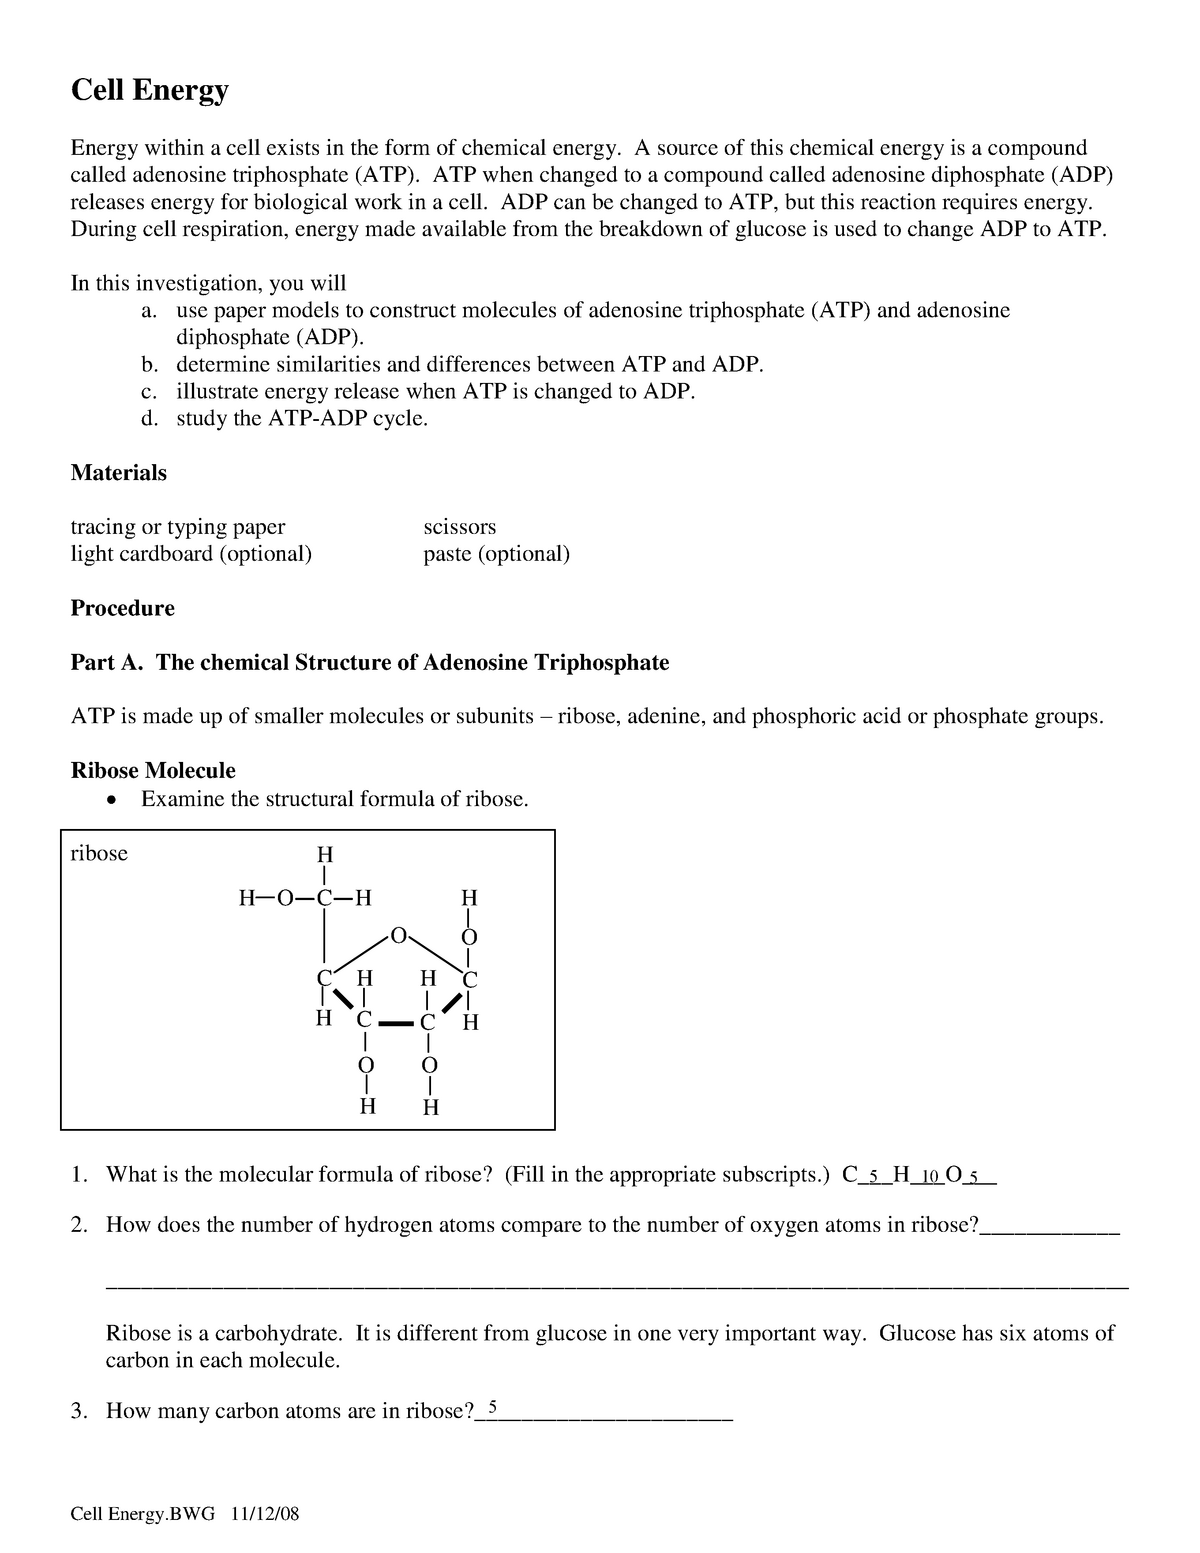 Cell Energy worksheet - Bio22 - Biology - StuDocu Pertaining To Atp Worksheet Answer Key